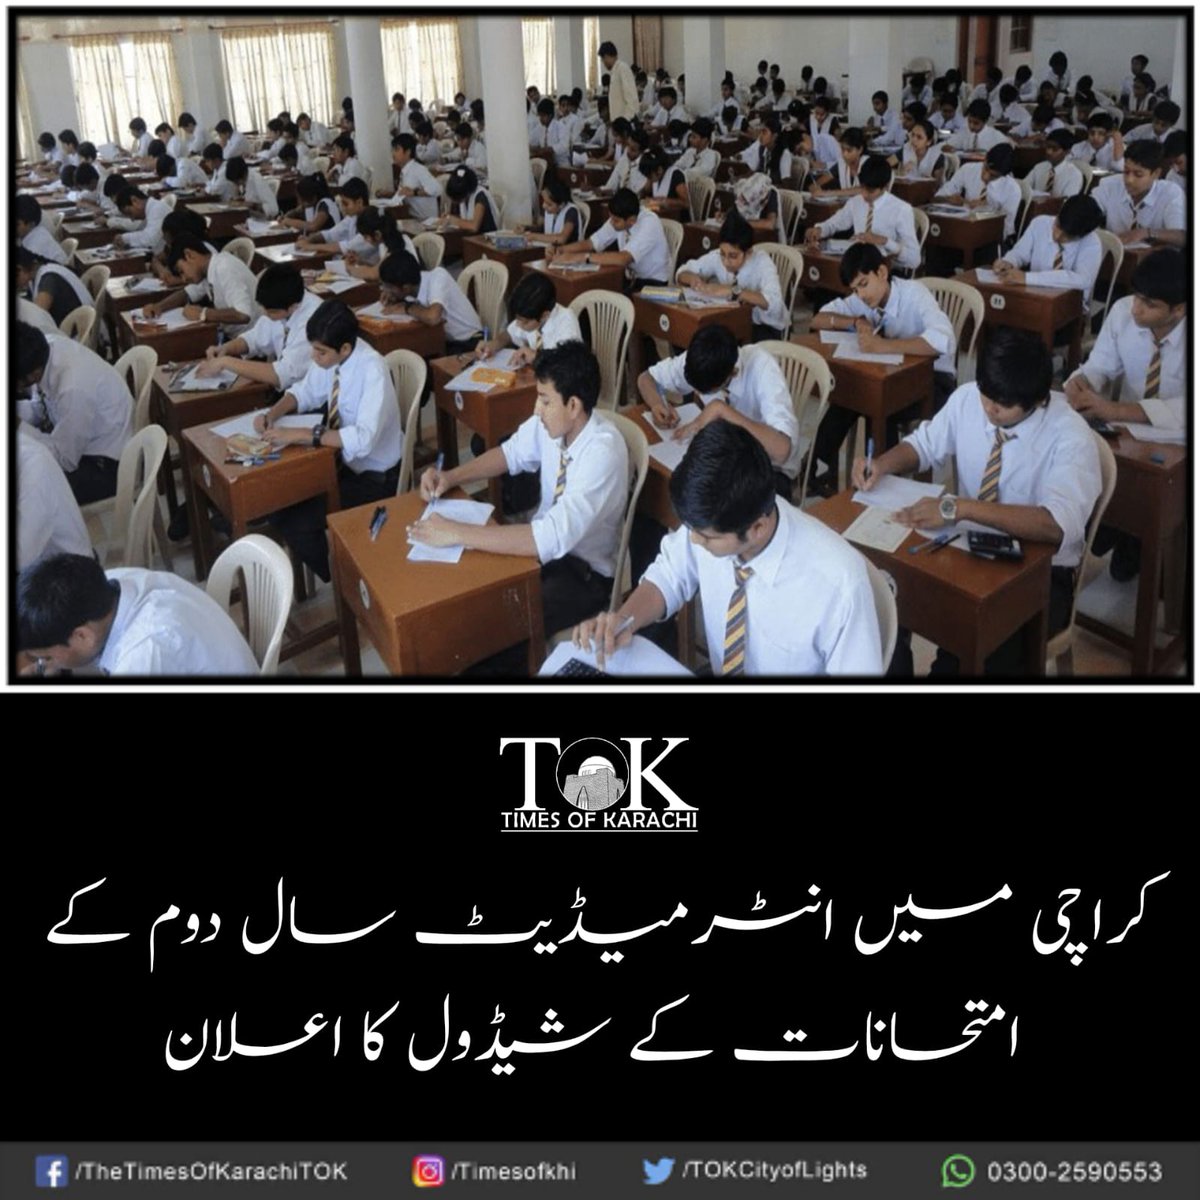 تفصیلات، bit.ly/3o0PnSR

#TOKAlert #Karachi #Intermediate #Exams2023